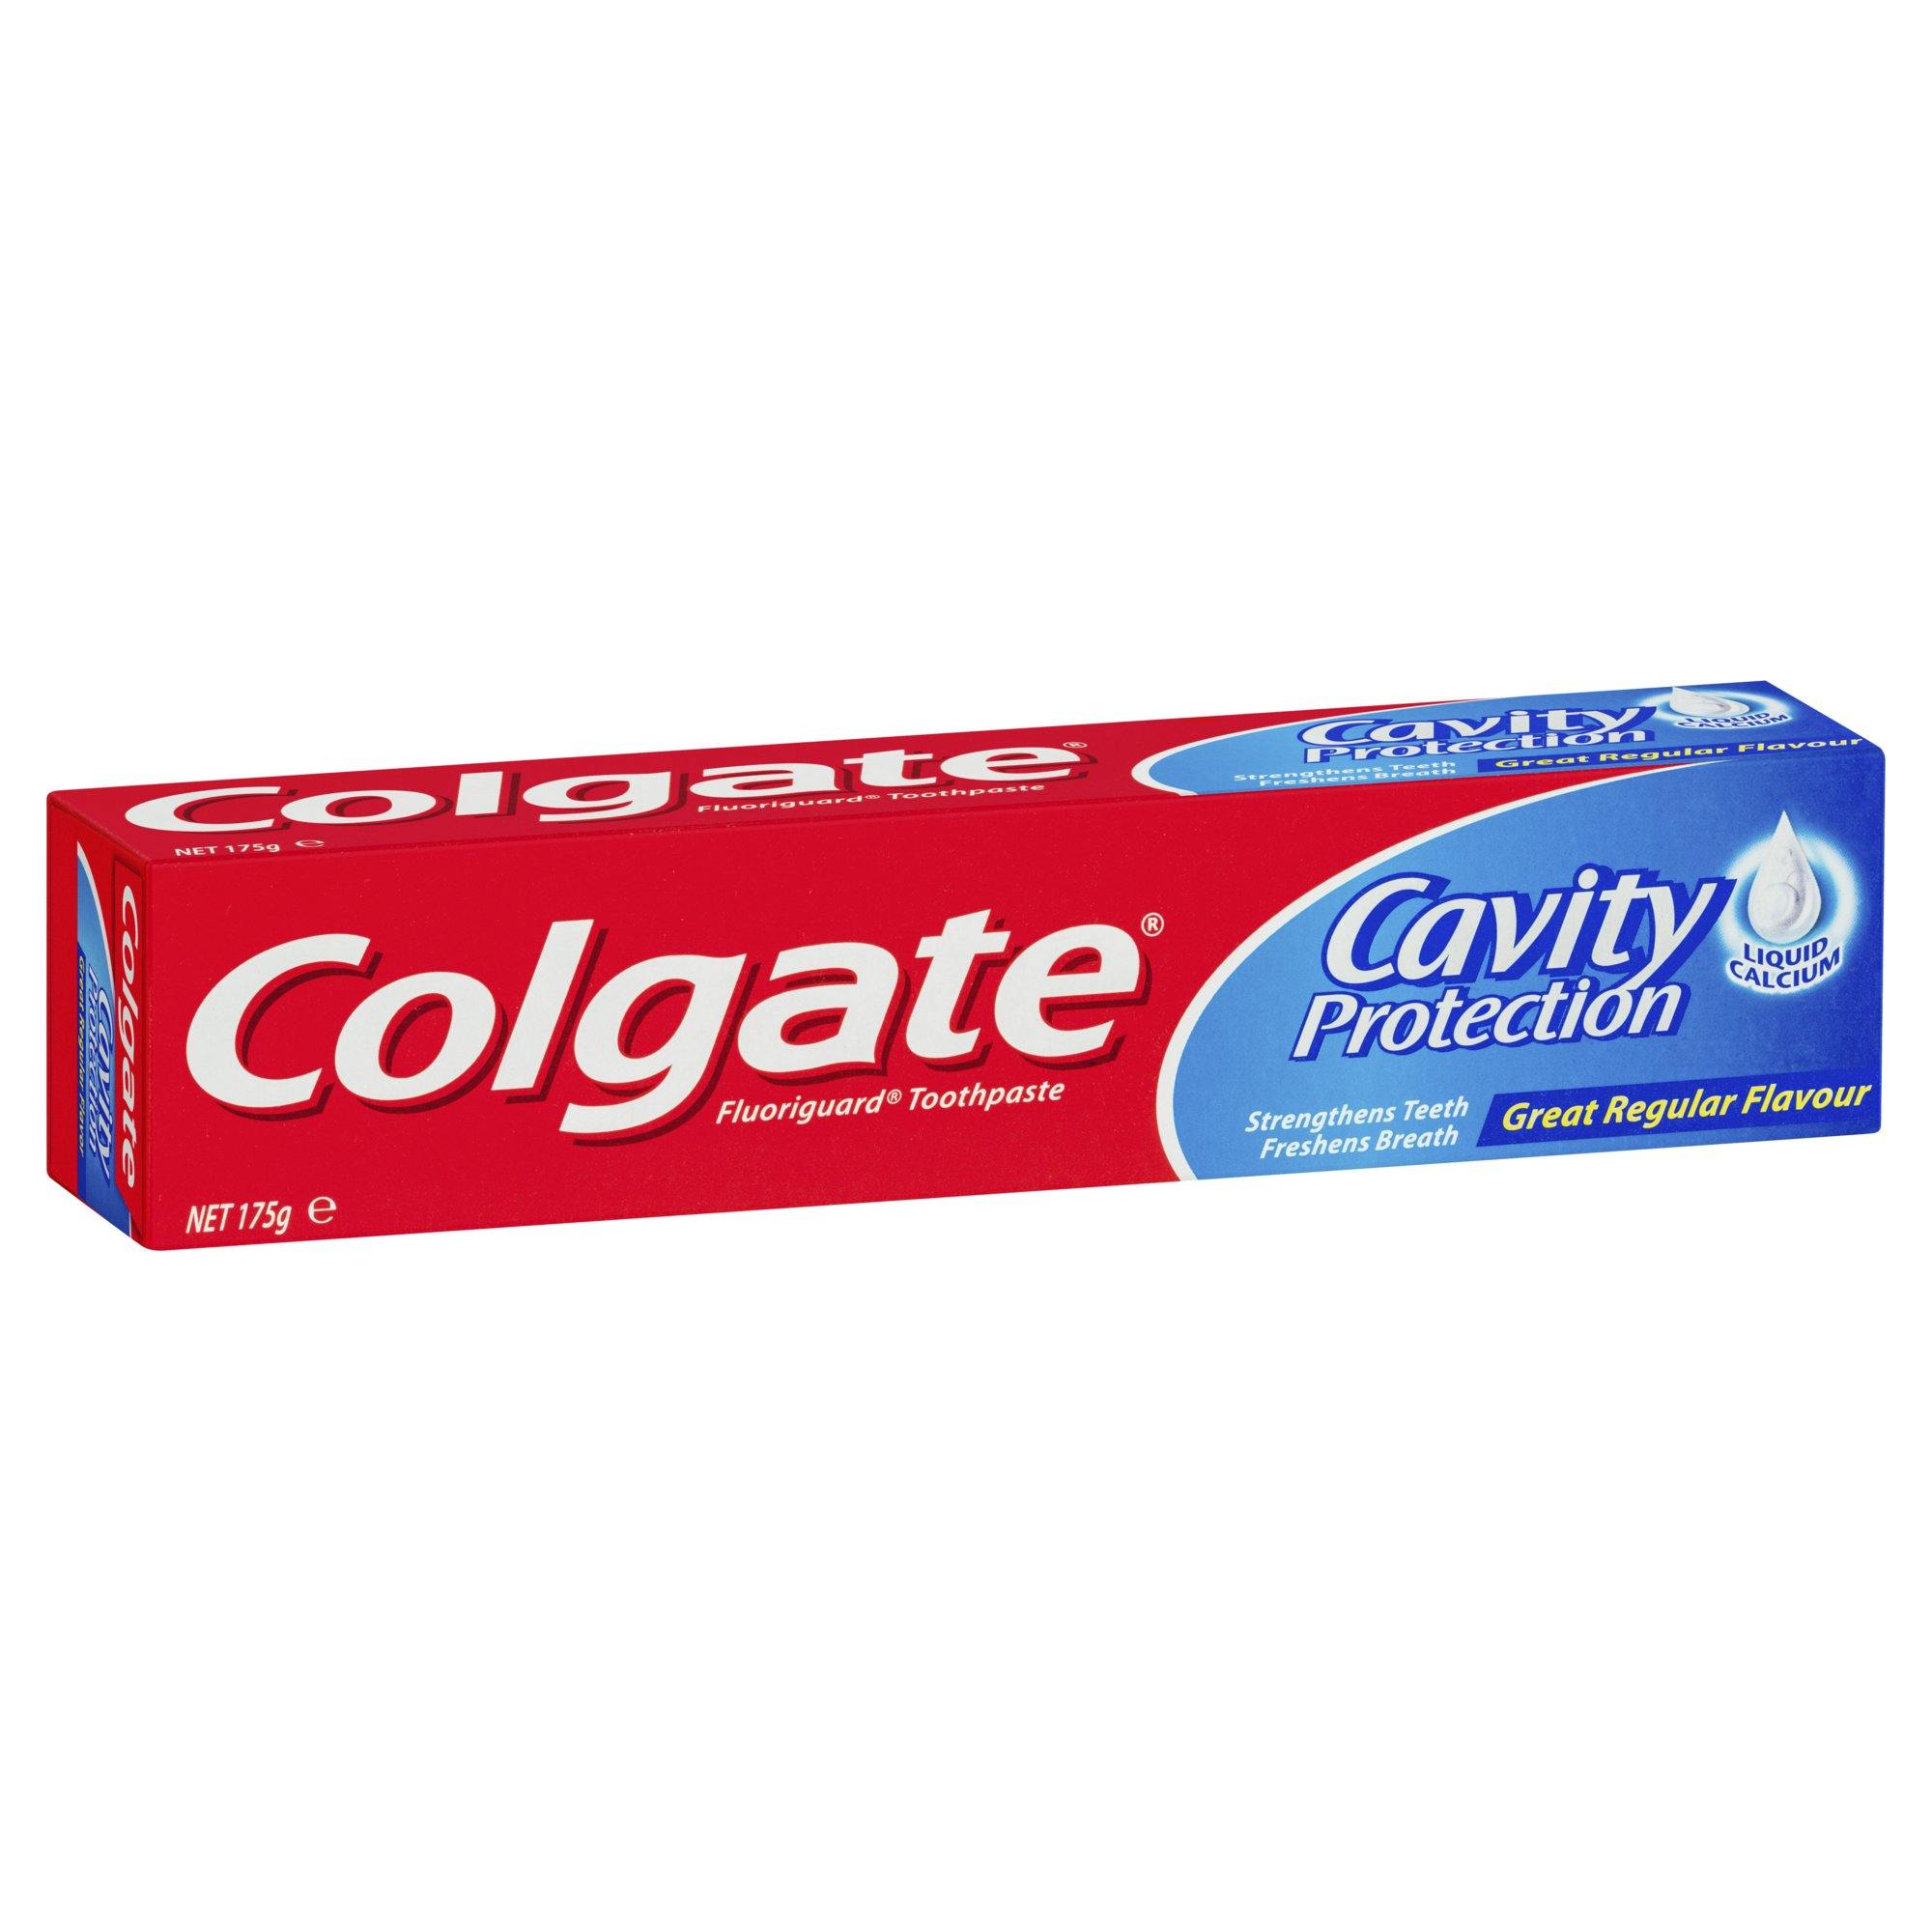 Colgate 175g Toothpaste MAXIMUM Cavity Protection - www.indiancart.com.au - Mouth Care - Colgate - Colgate